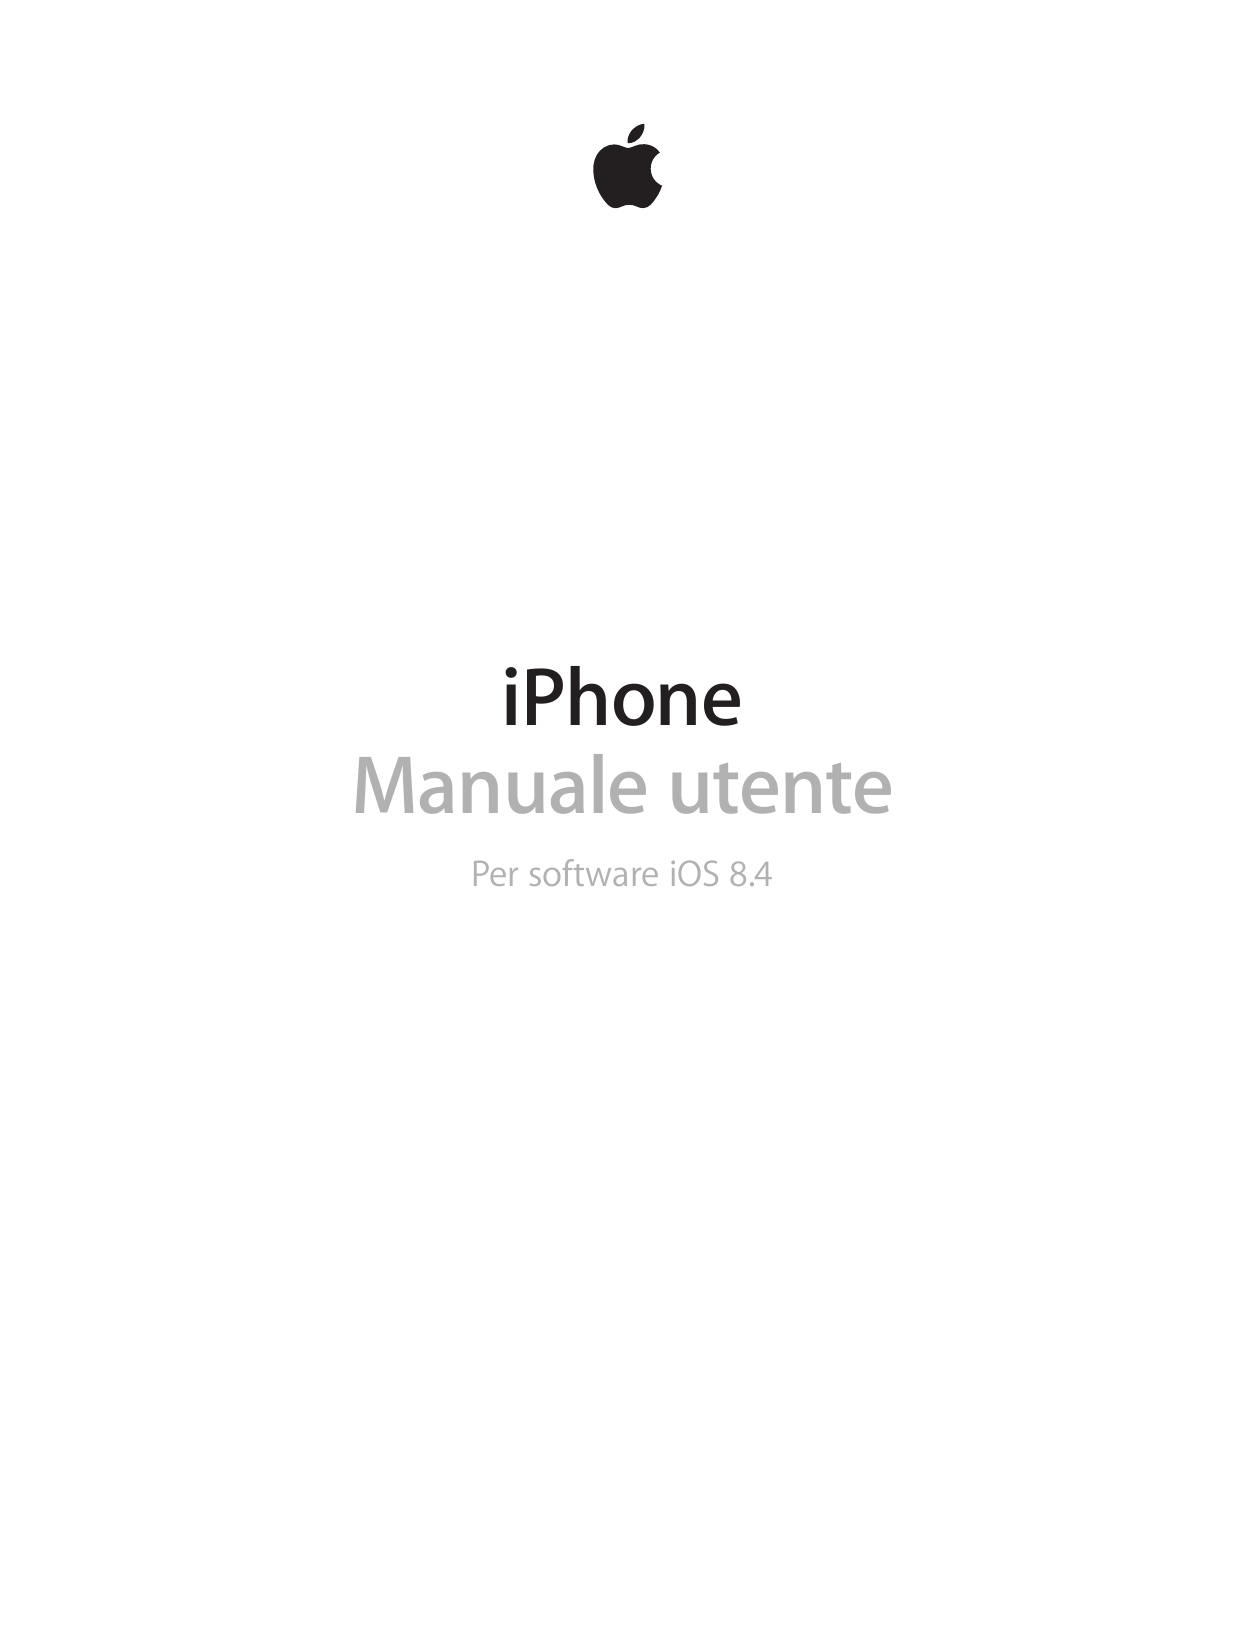 iPhoneManuale utentePer software iOS 8.4